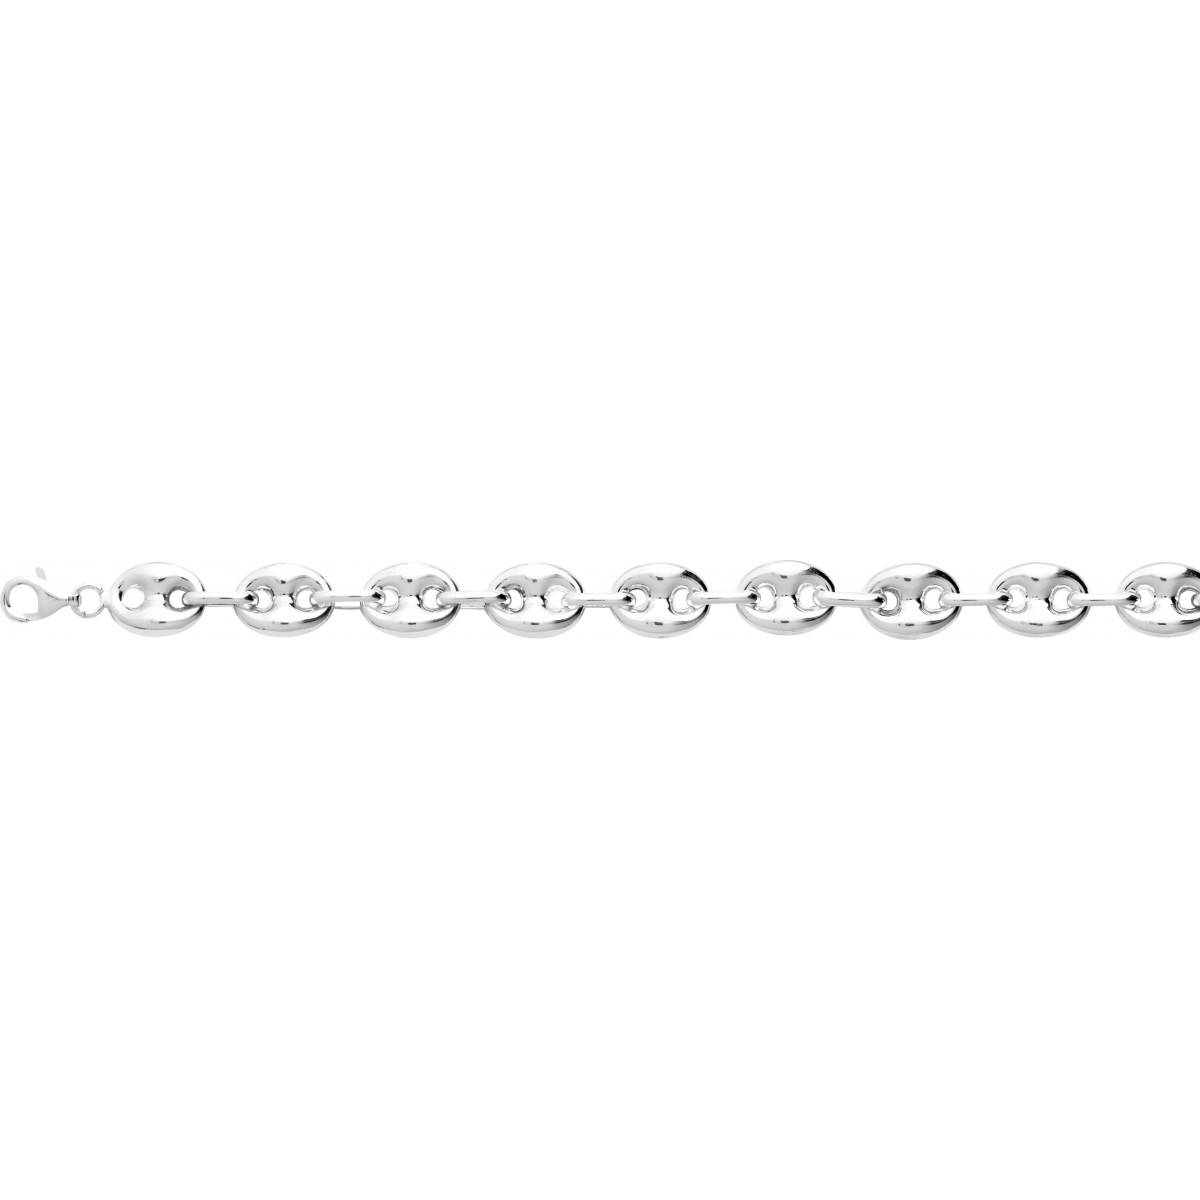 Bracelet rh925 Silver - Size: 21  Lua Blanca  301402B.21